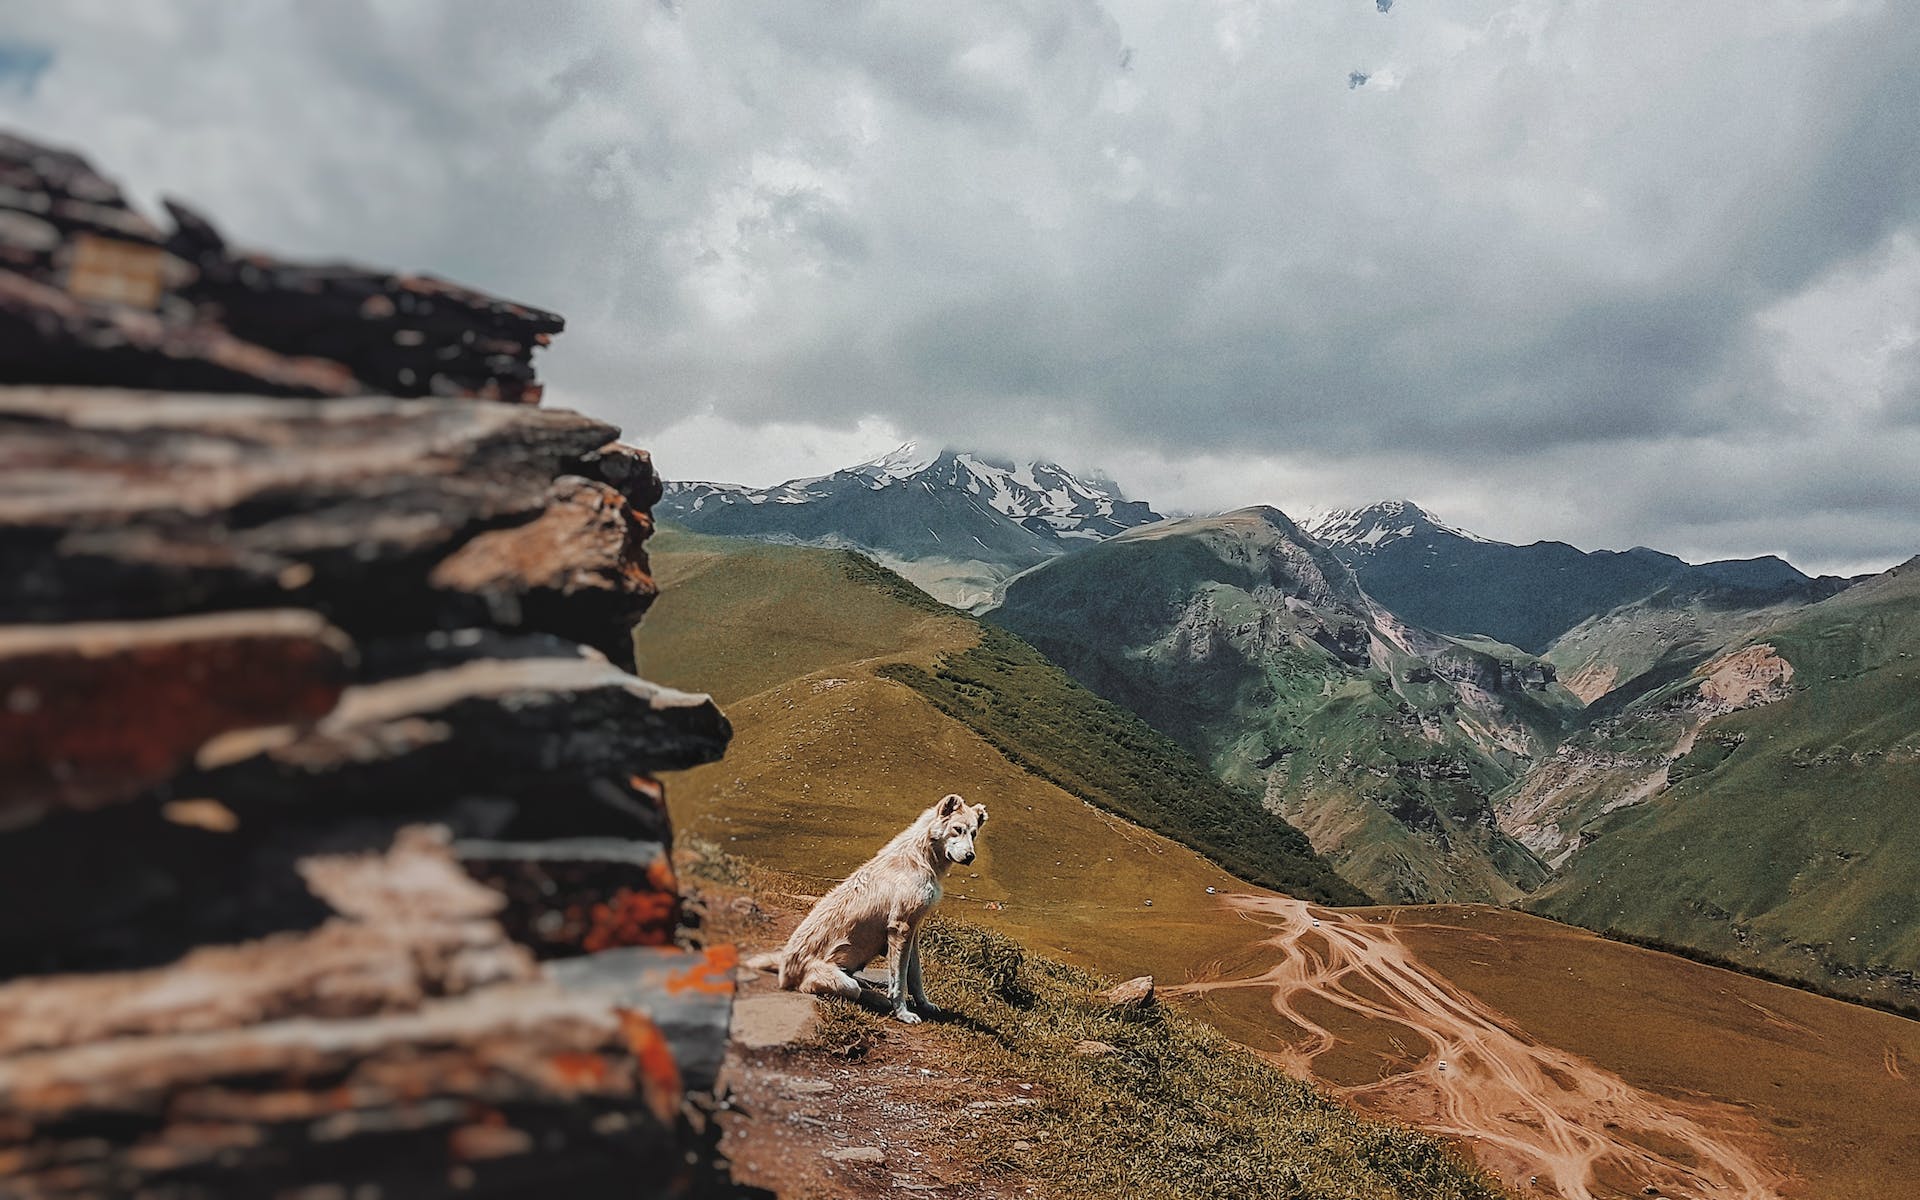 A senior dog sitting on a mountainside